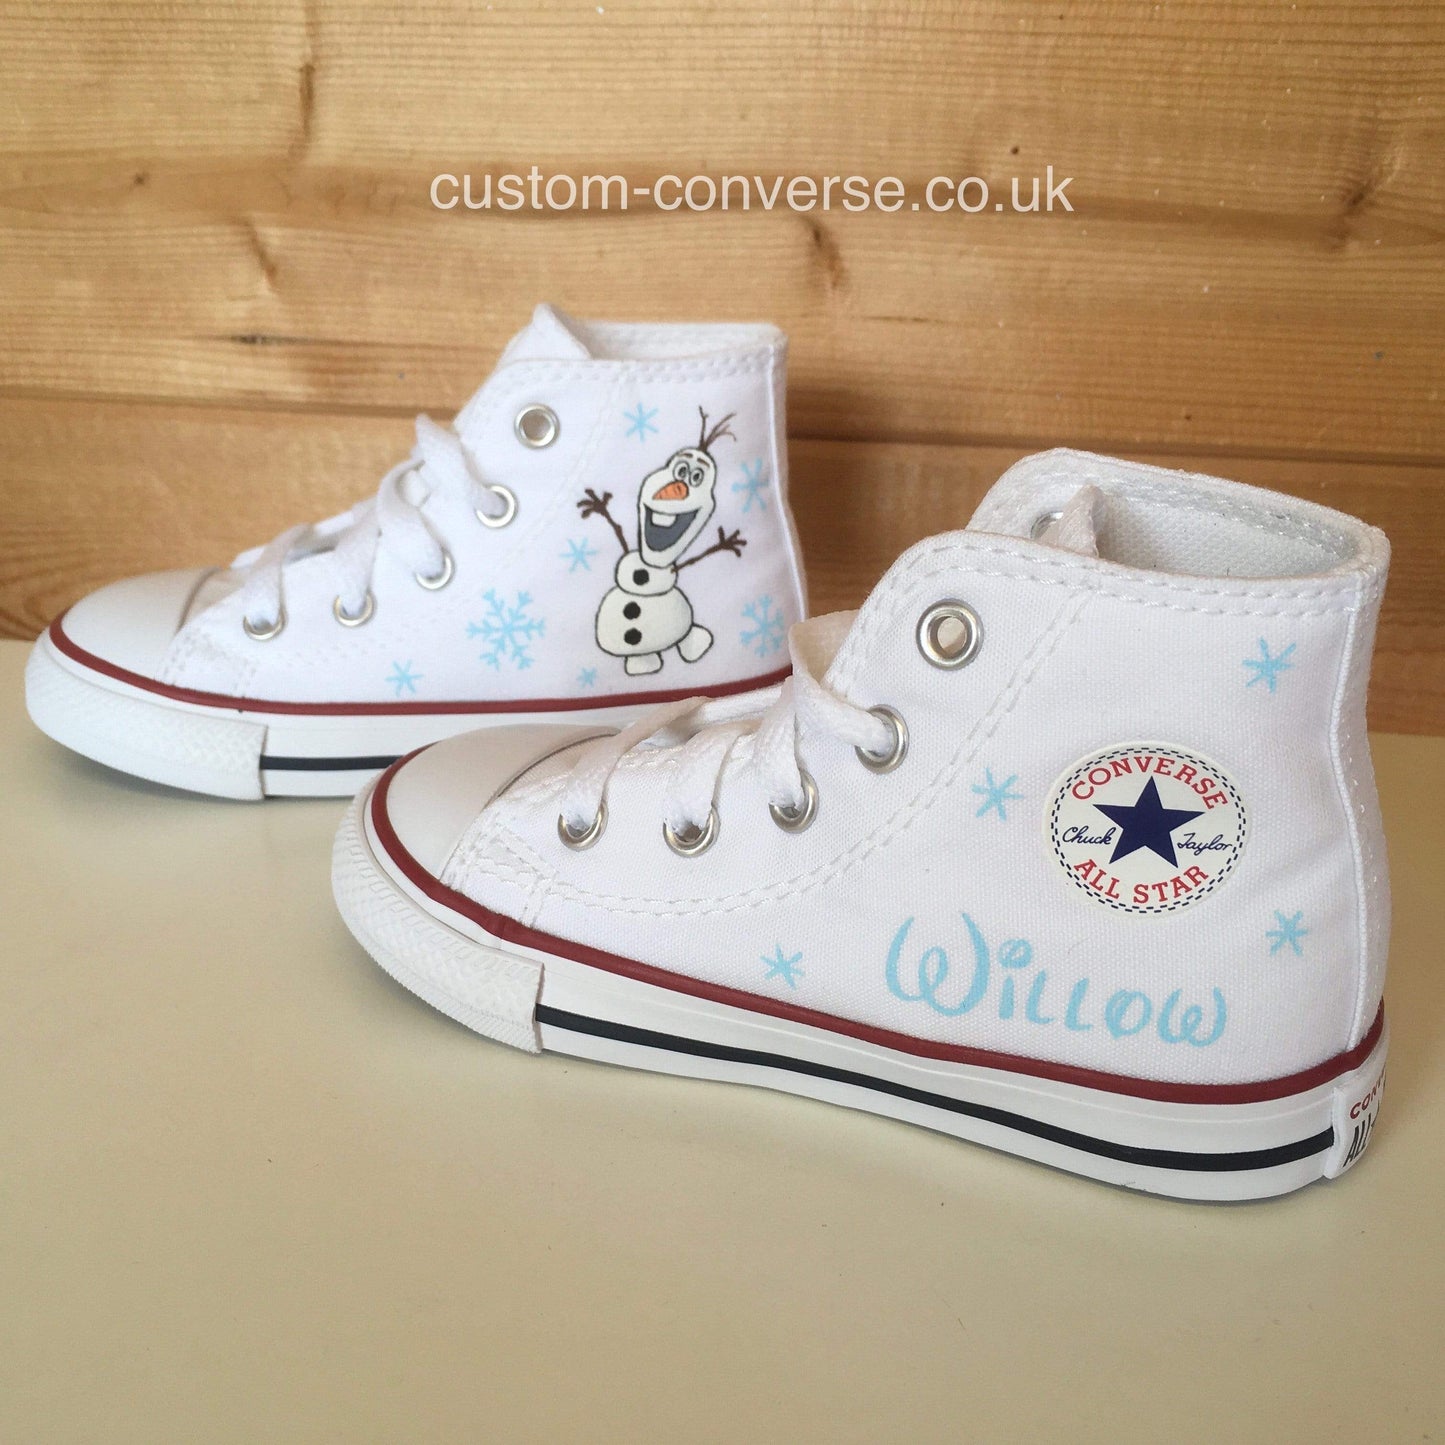 Kids Olaf - Custom Converse Ltd.